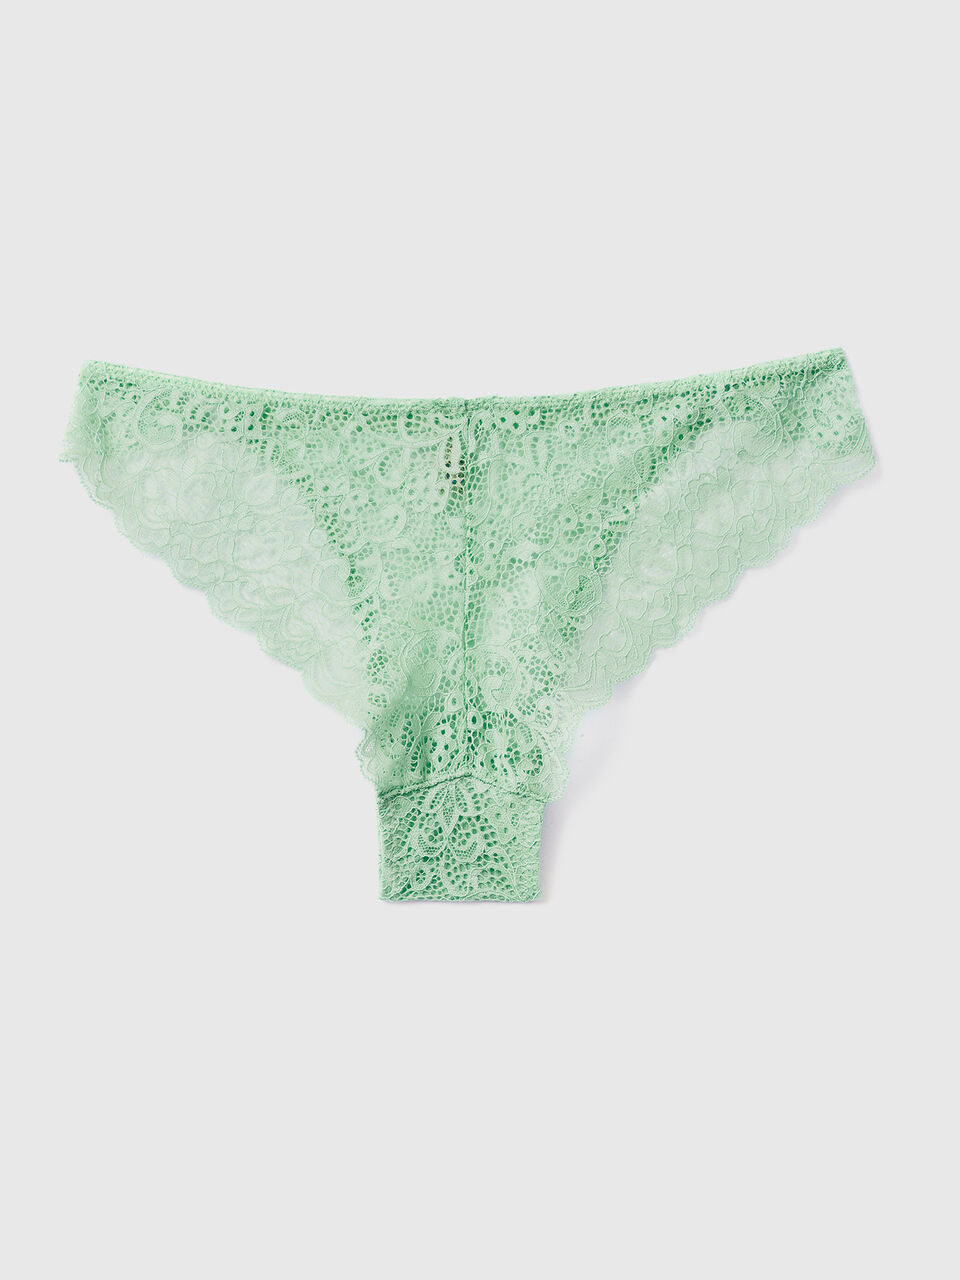 Benetton stretch lace underwear - 36yz1s00v_1r4